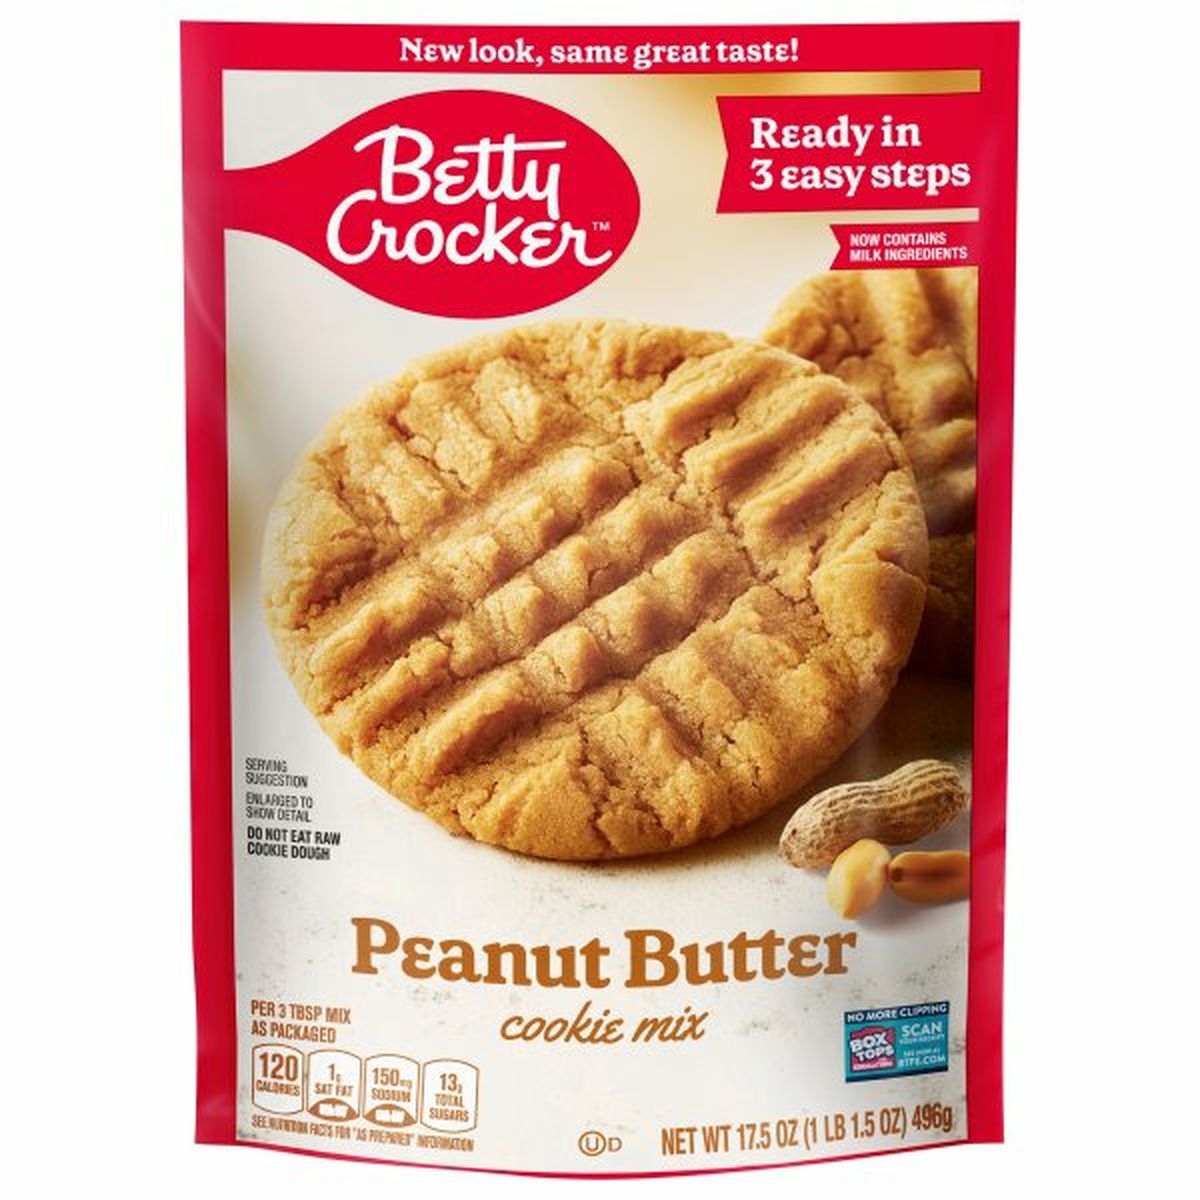 Calories in Betty Crocker Cookie Mix, Peanut Butter